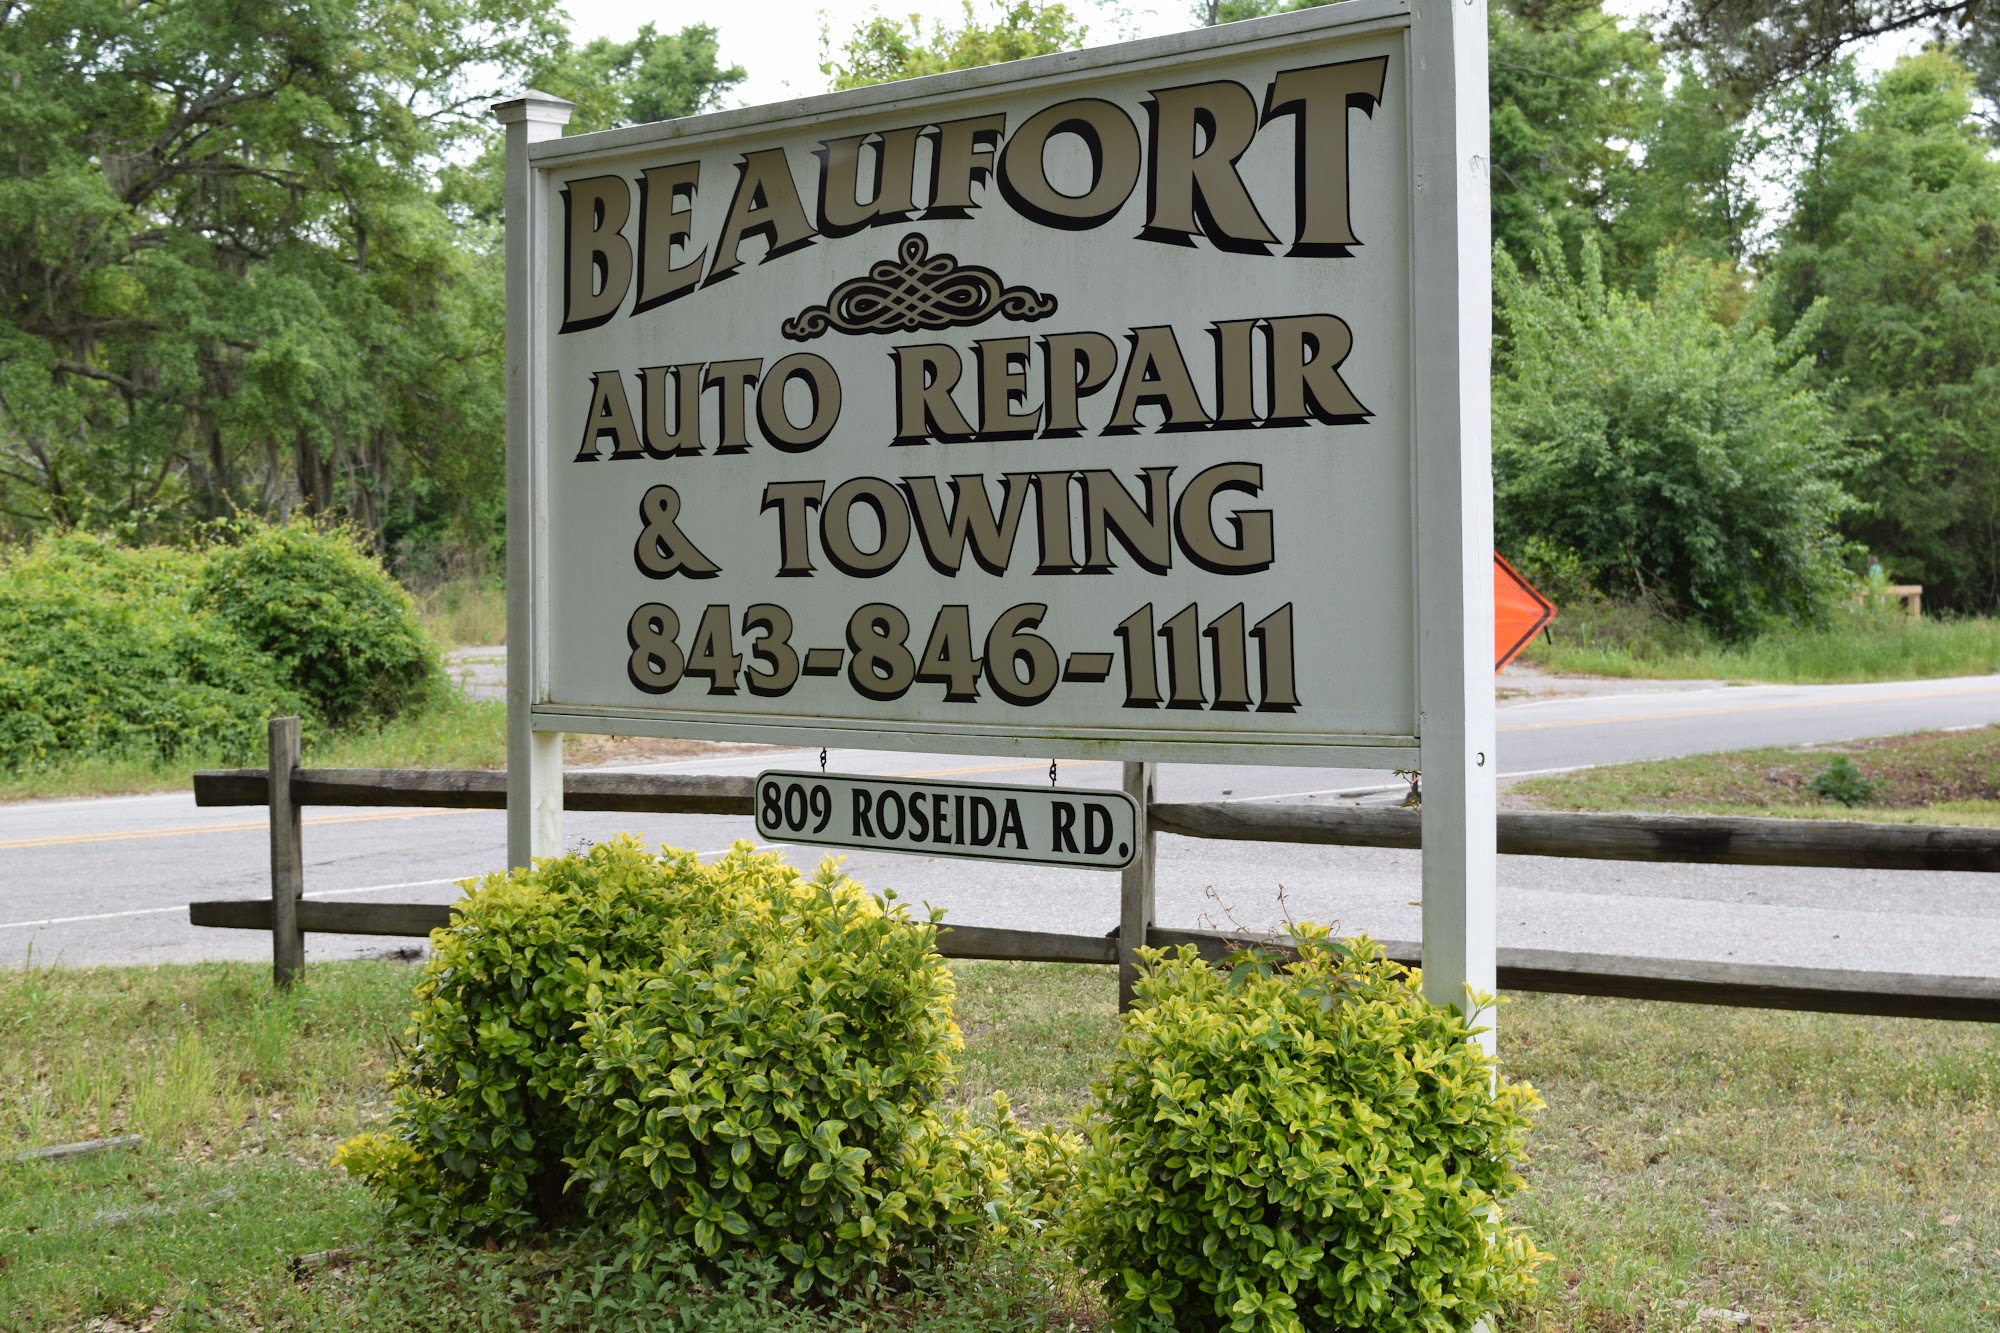 Beaufort Auto Repair & Towing